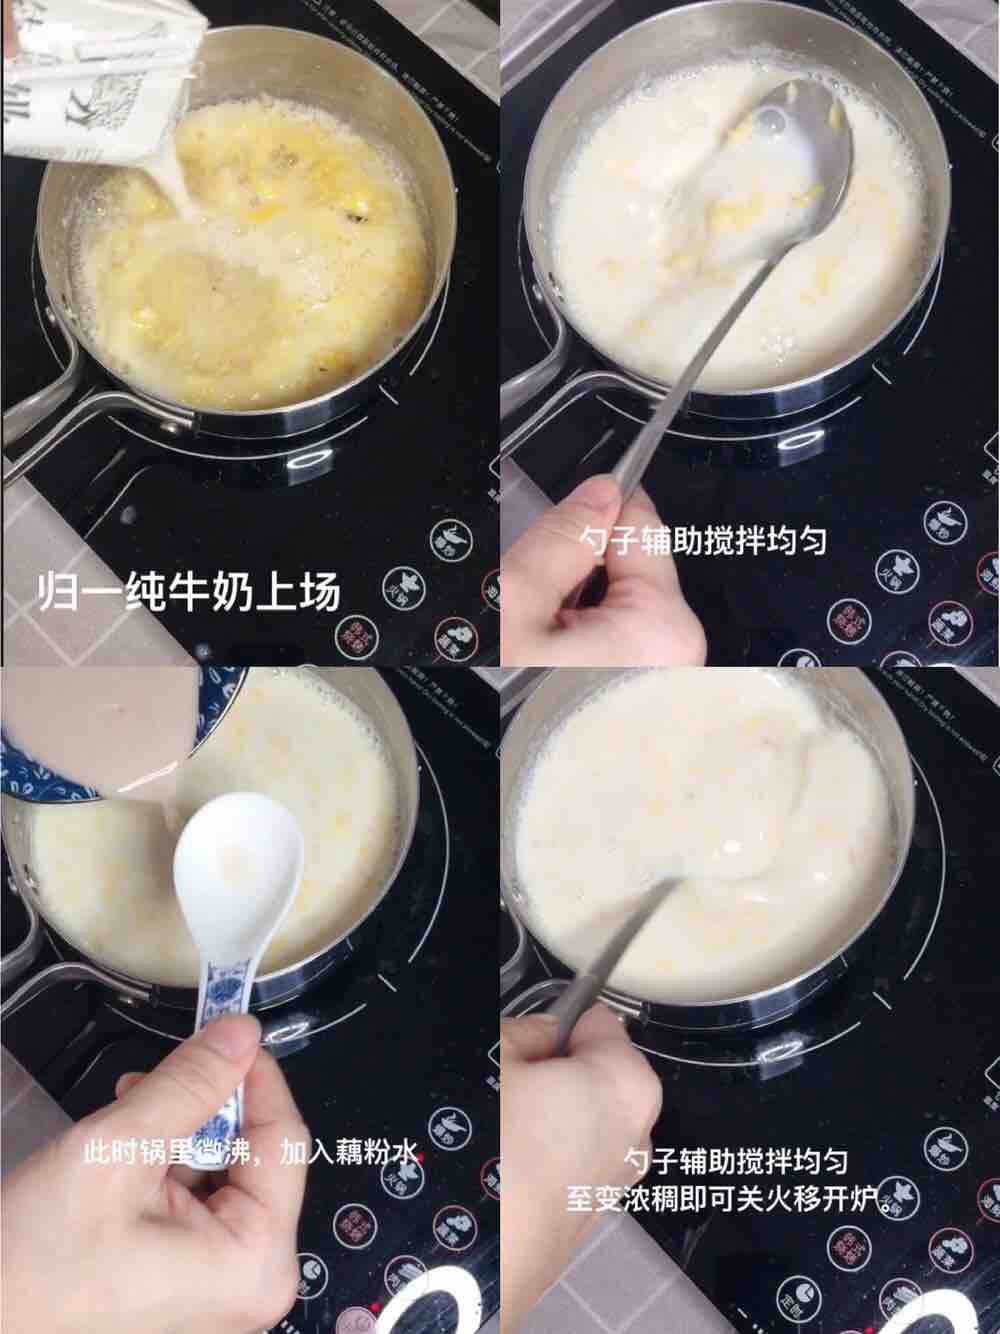 Creamy, Rich and Refreshing~~milk Egg Flower Horseshoe Lotion recipe